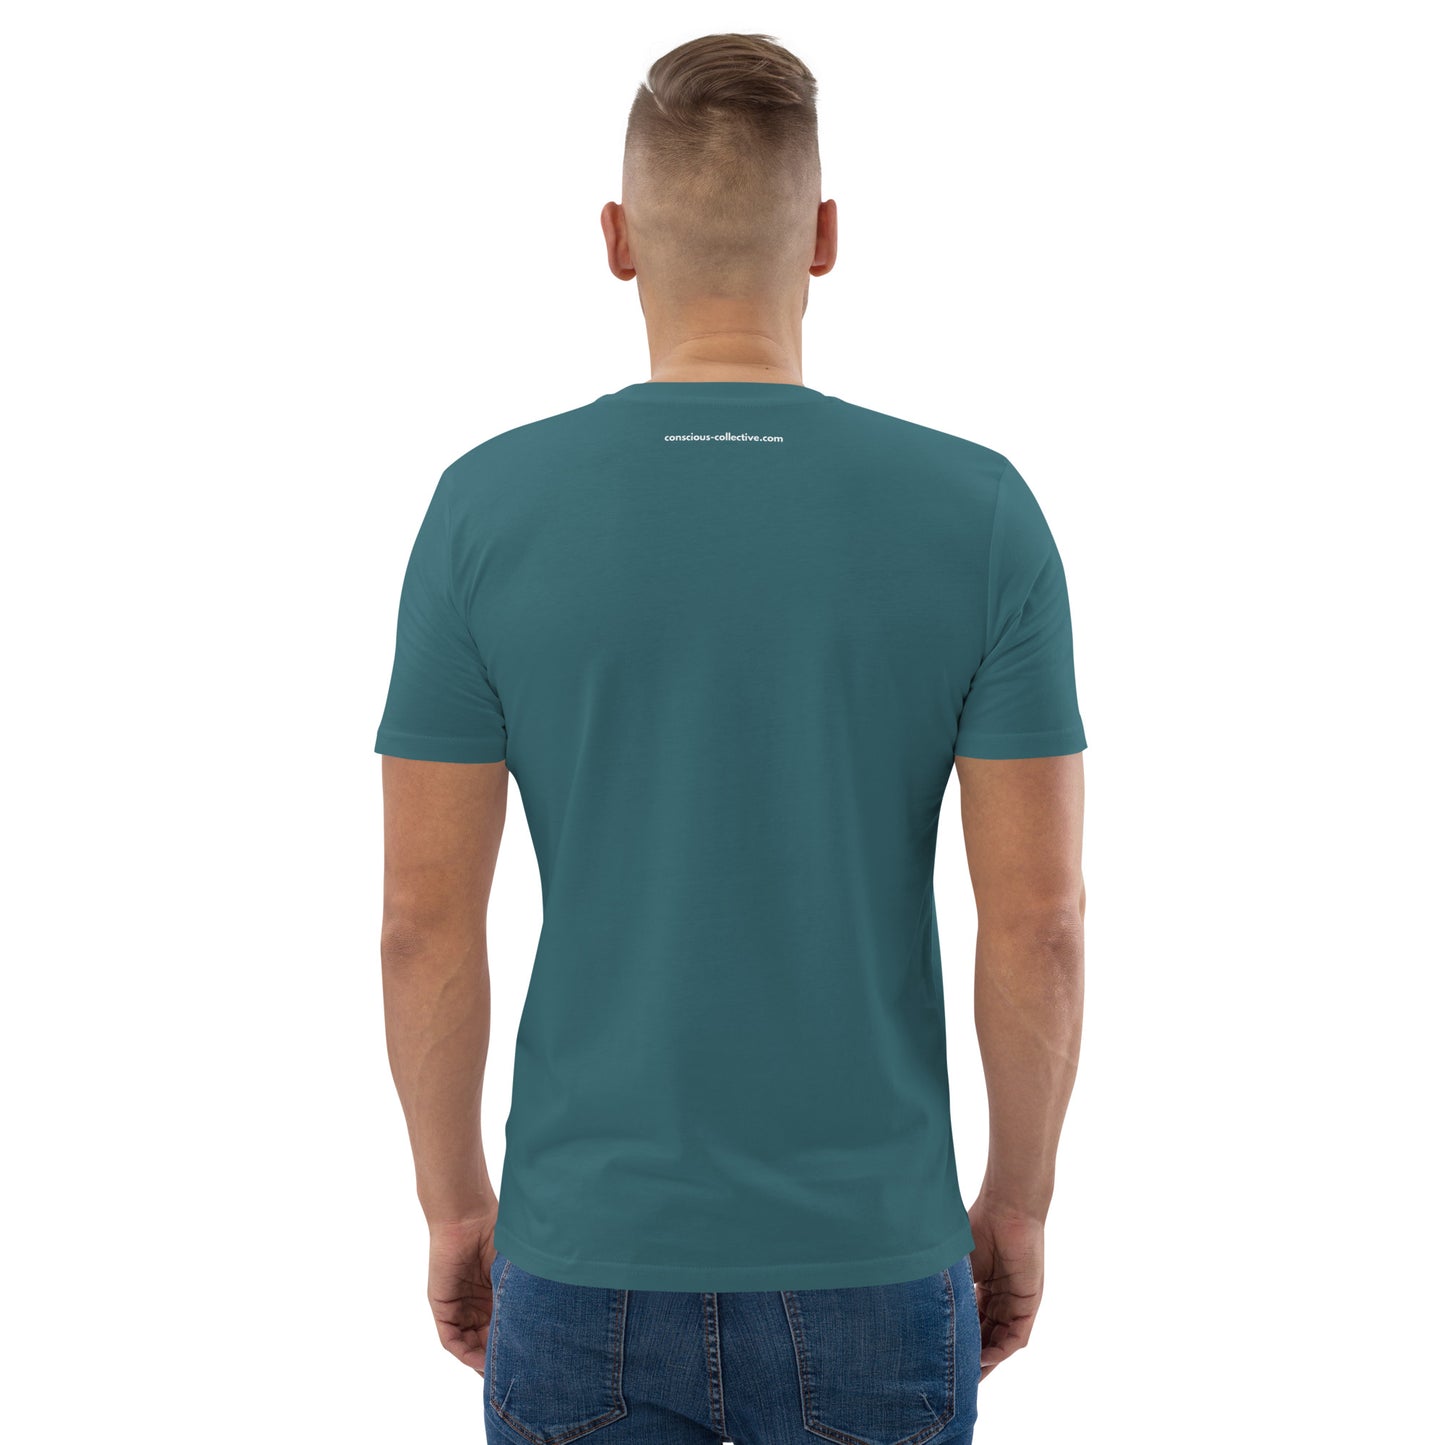 Choose Love - Unisex Organic Cotton T-Shirt #1